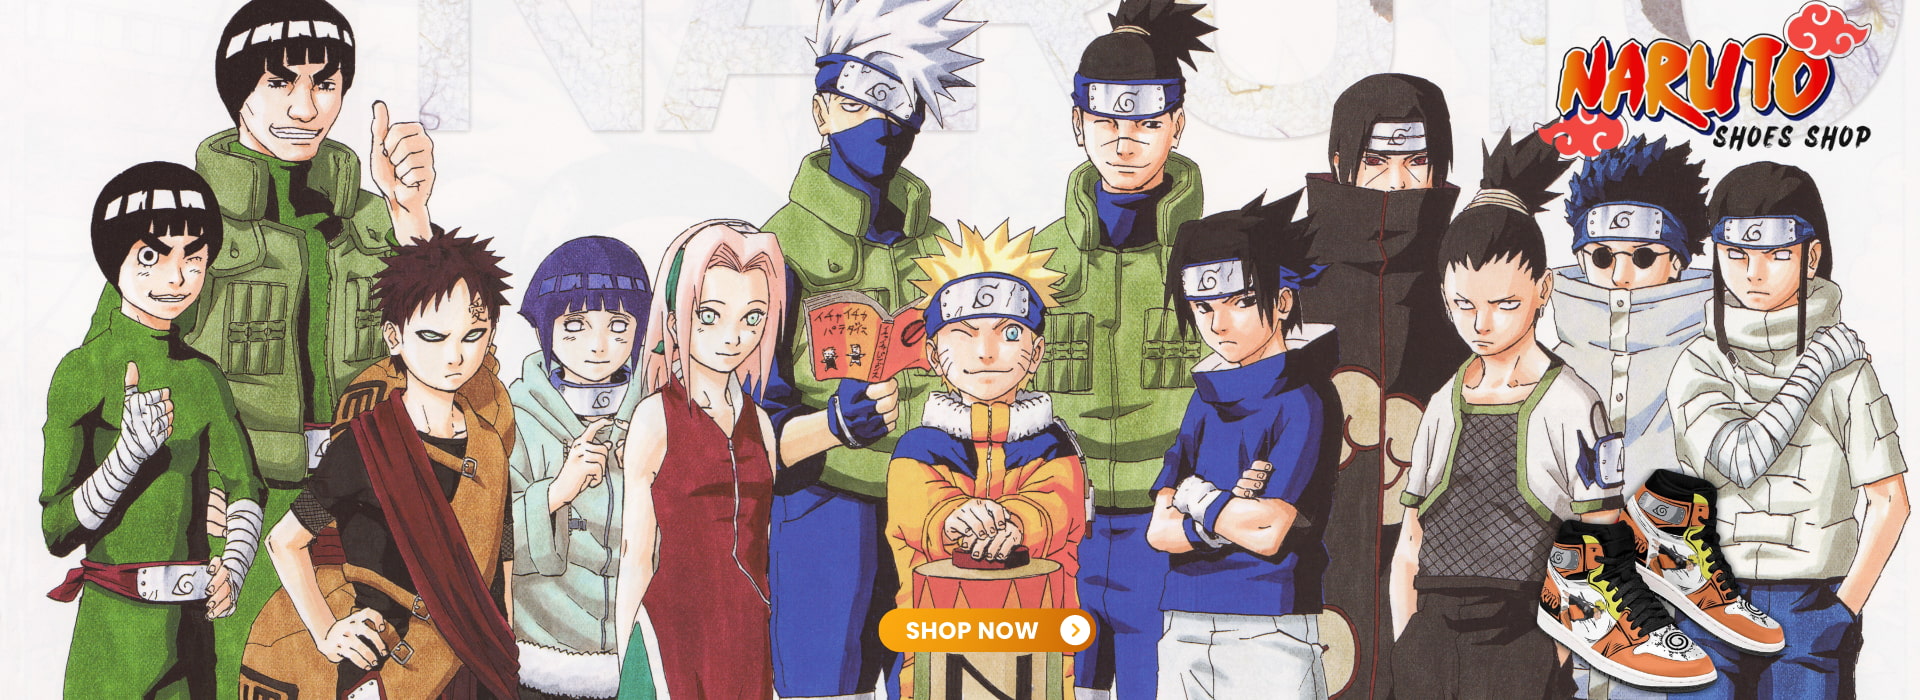 Naruto Shoes Shop Banner